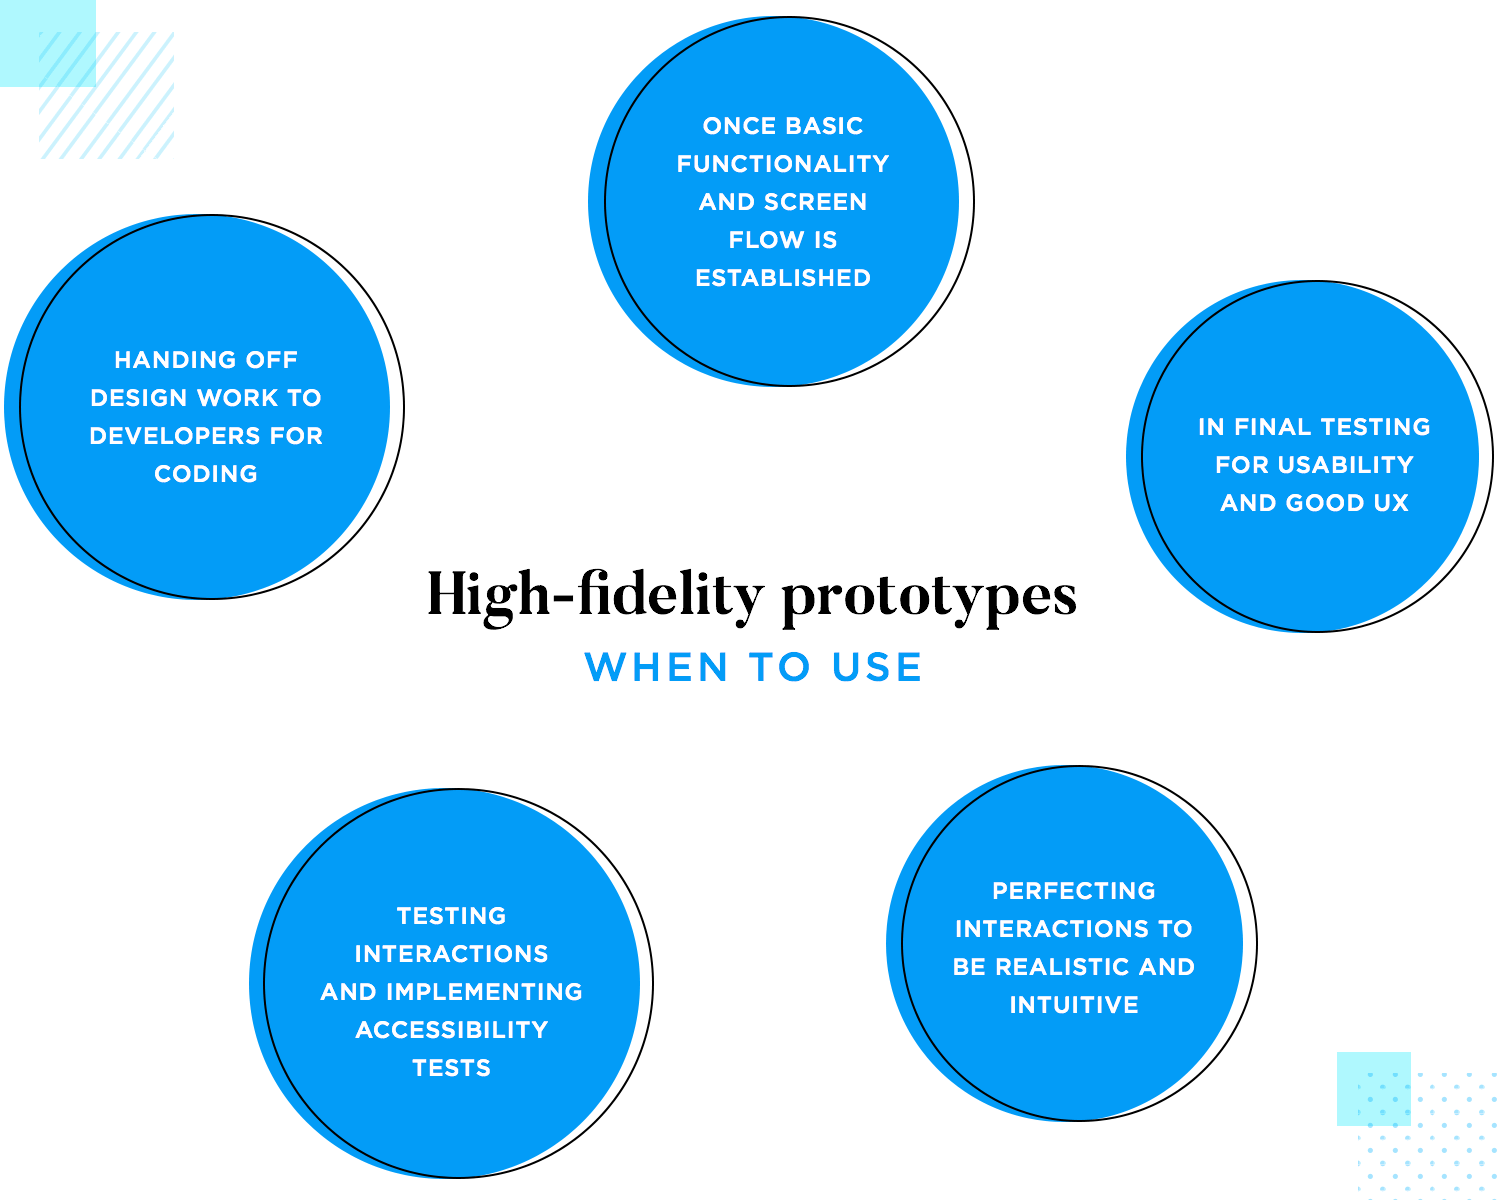 High fidelity prototypes improve design-handoff